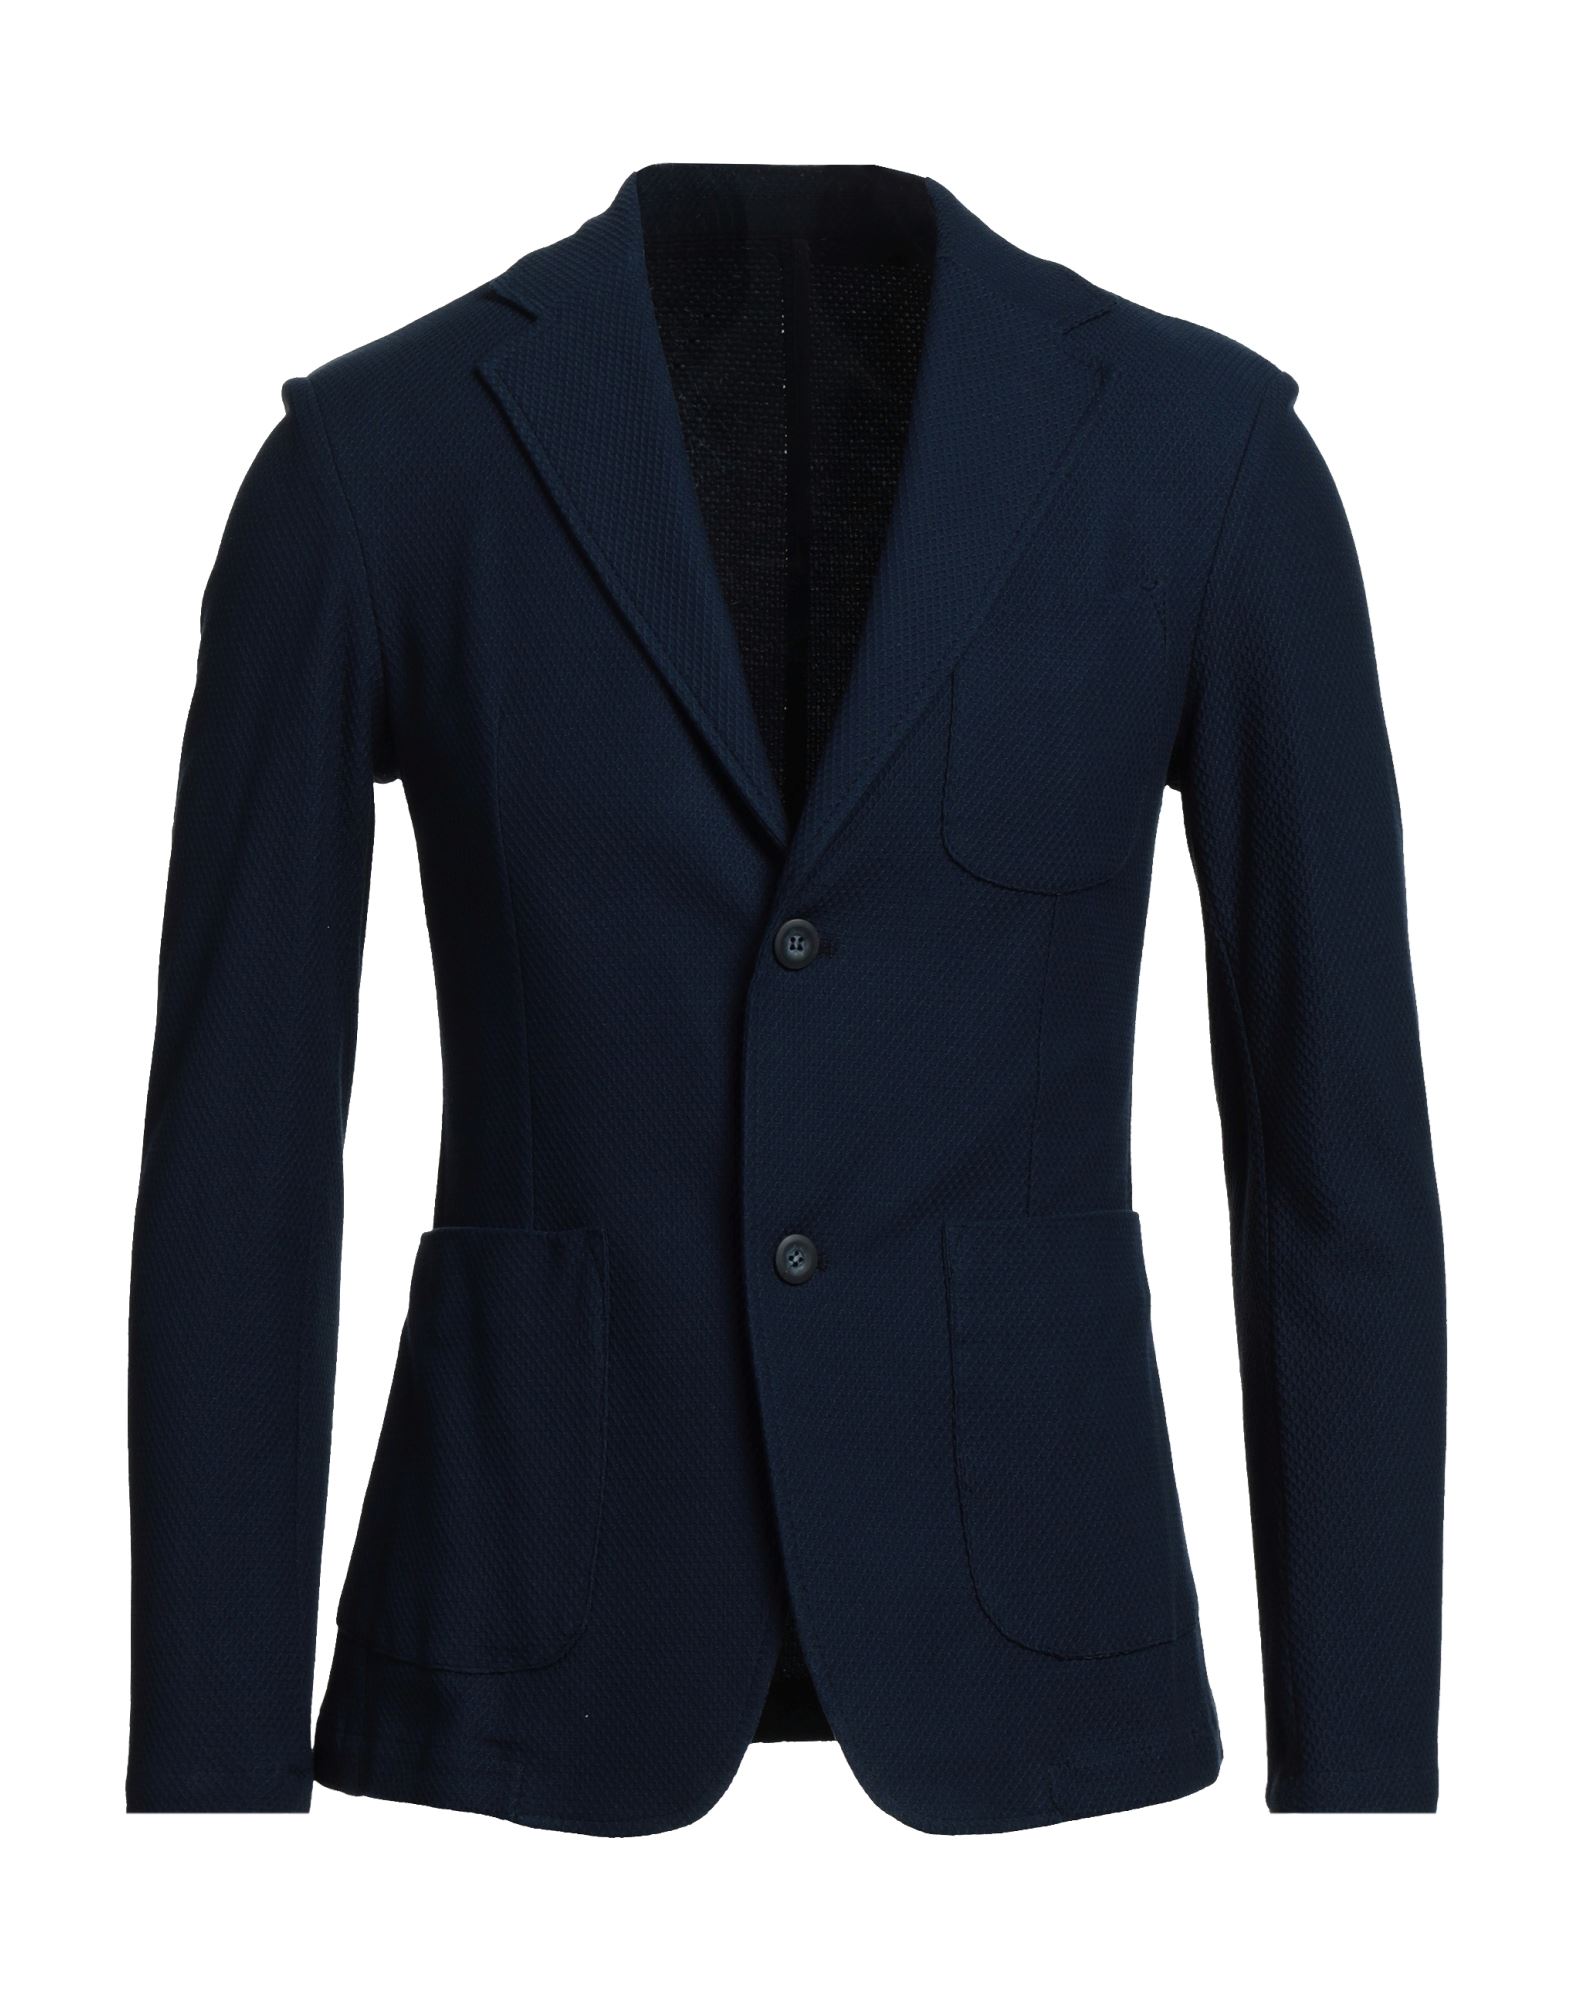 Authentic Original Vintage Style Suit Jackets In Blue